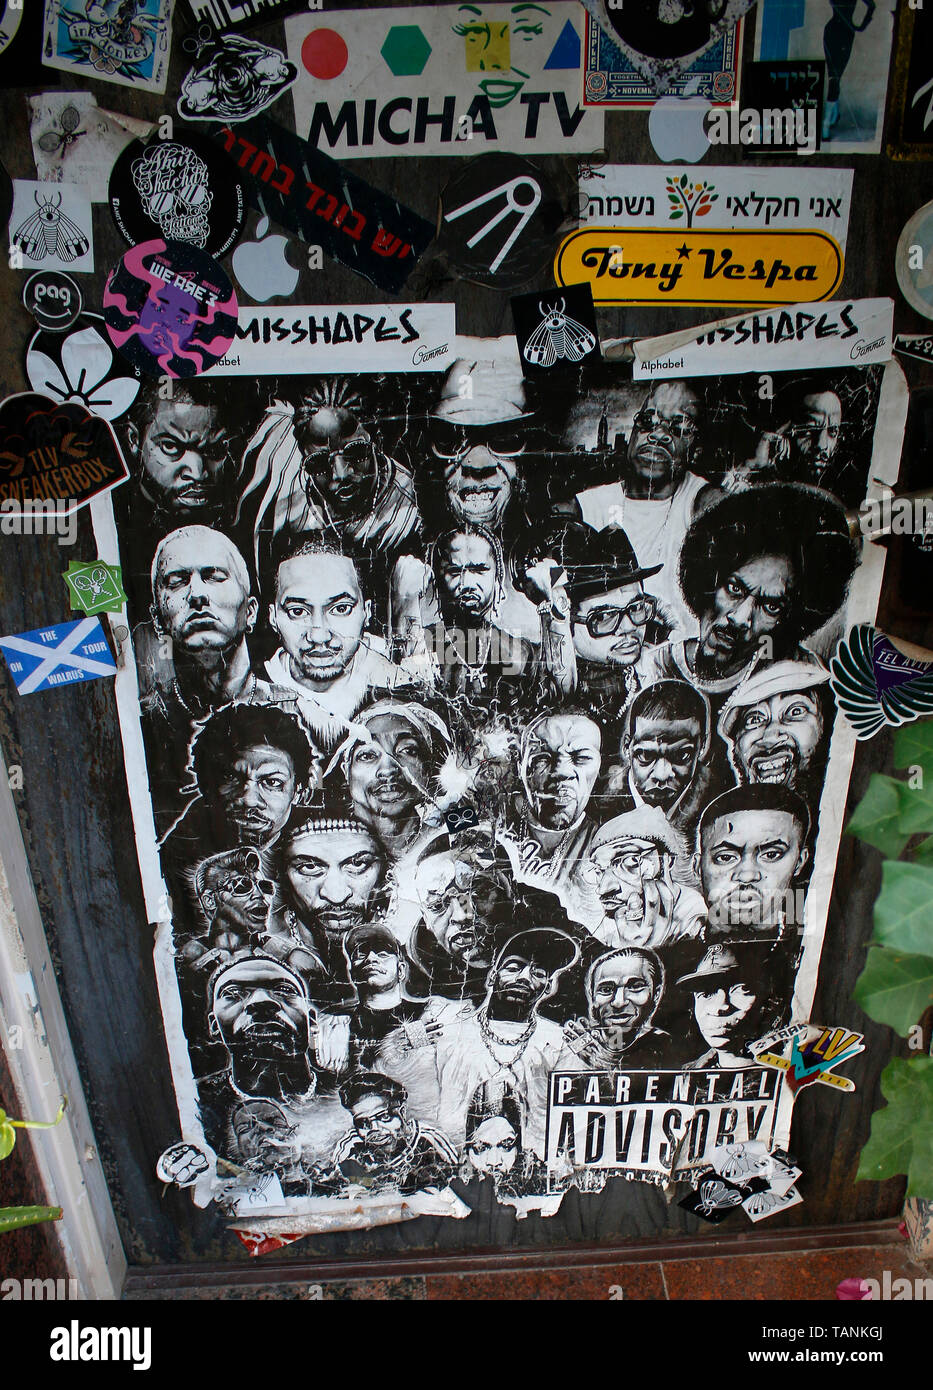 Aufkleber/ Hop-Groessen Hip Street Art mit wie Eminem, Dr. Dre, Ice Cube,  Ice T., Snoop Dogg, 50 cent u.a., Tel Aviv, Israël/ plage, mer Méditerranée  Photo Stock - Alamy